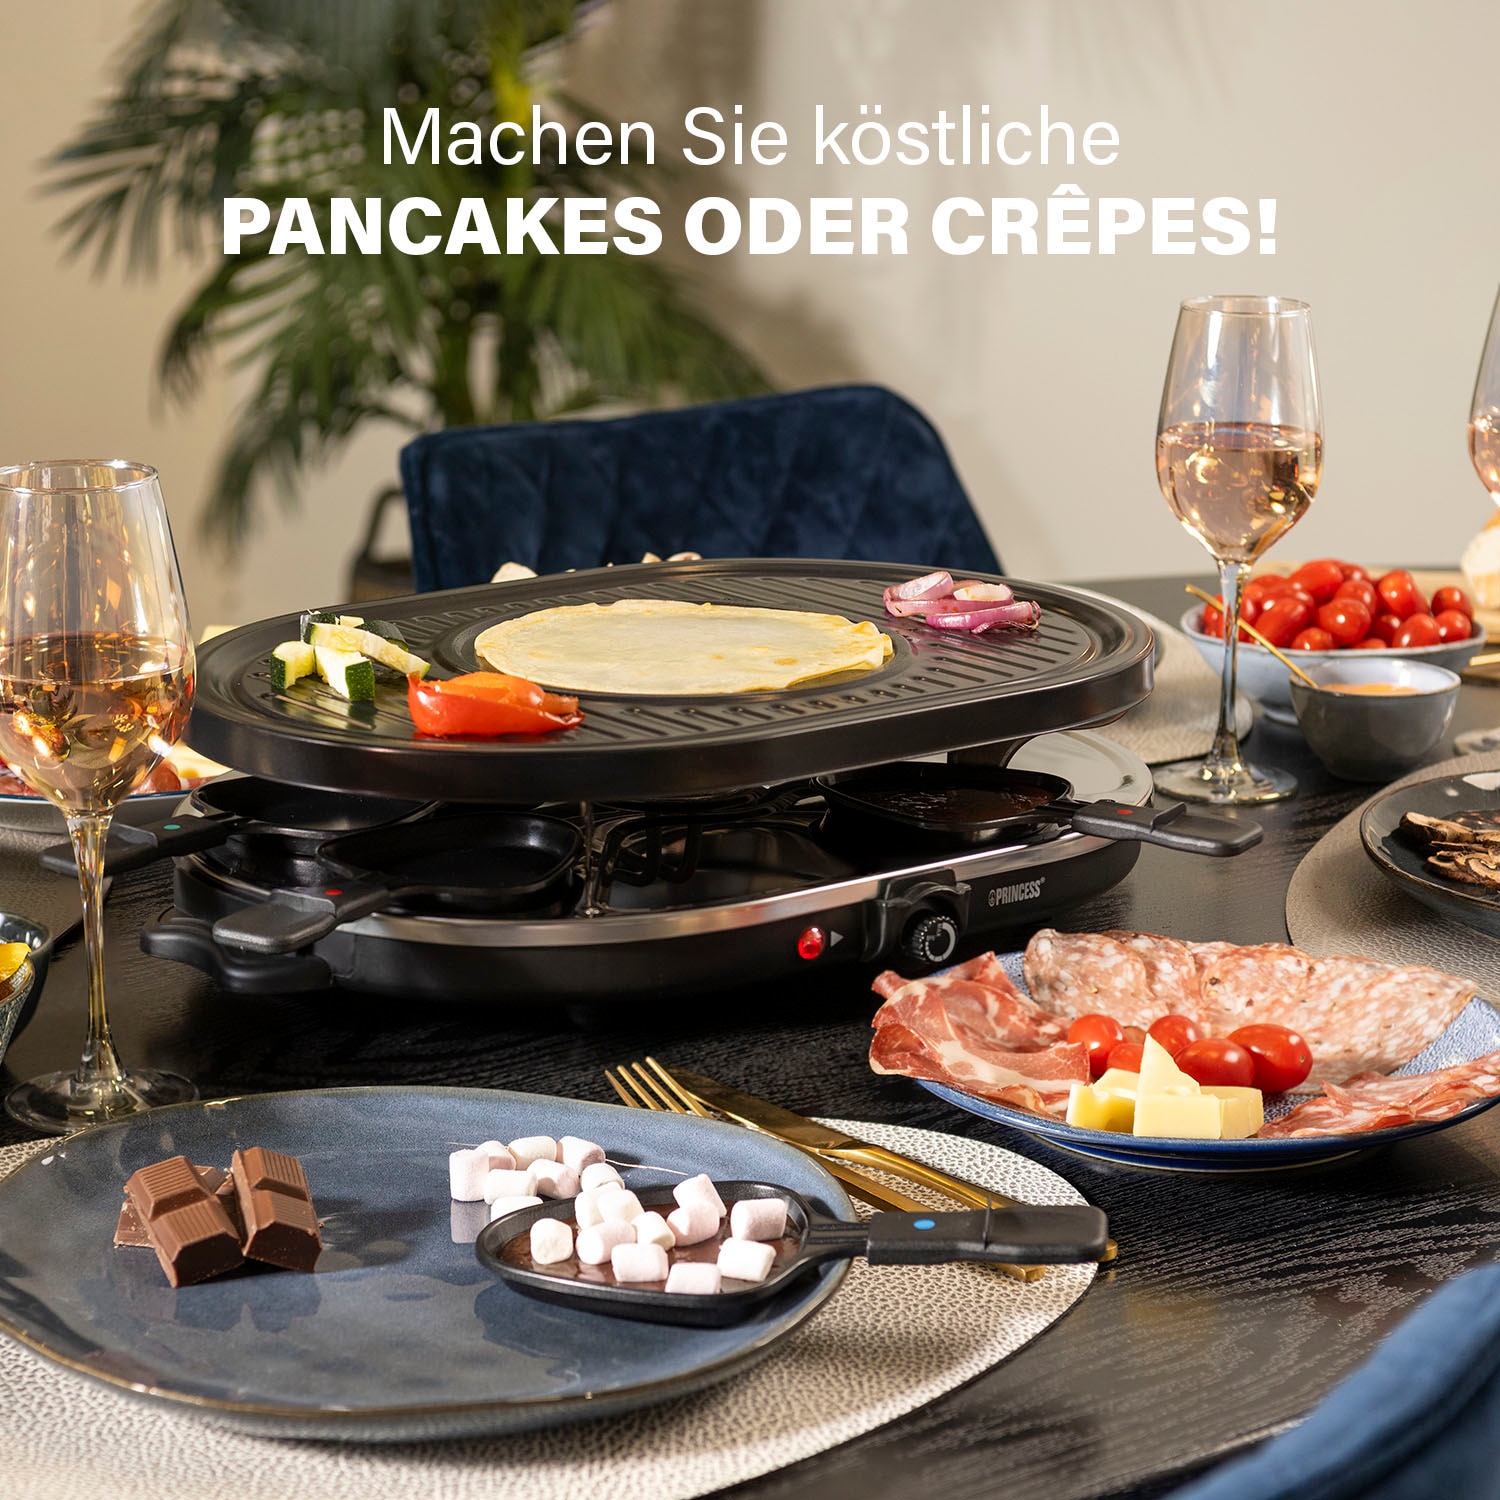 PRINCESS Raclette 8 Oval online Raclettepfännchen, 8 Watt Party Grill kaufen - 162700, 1200